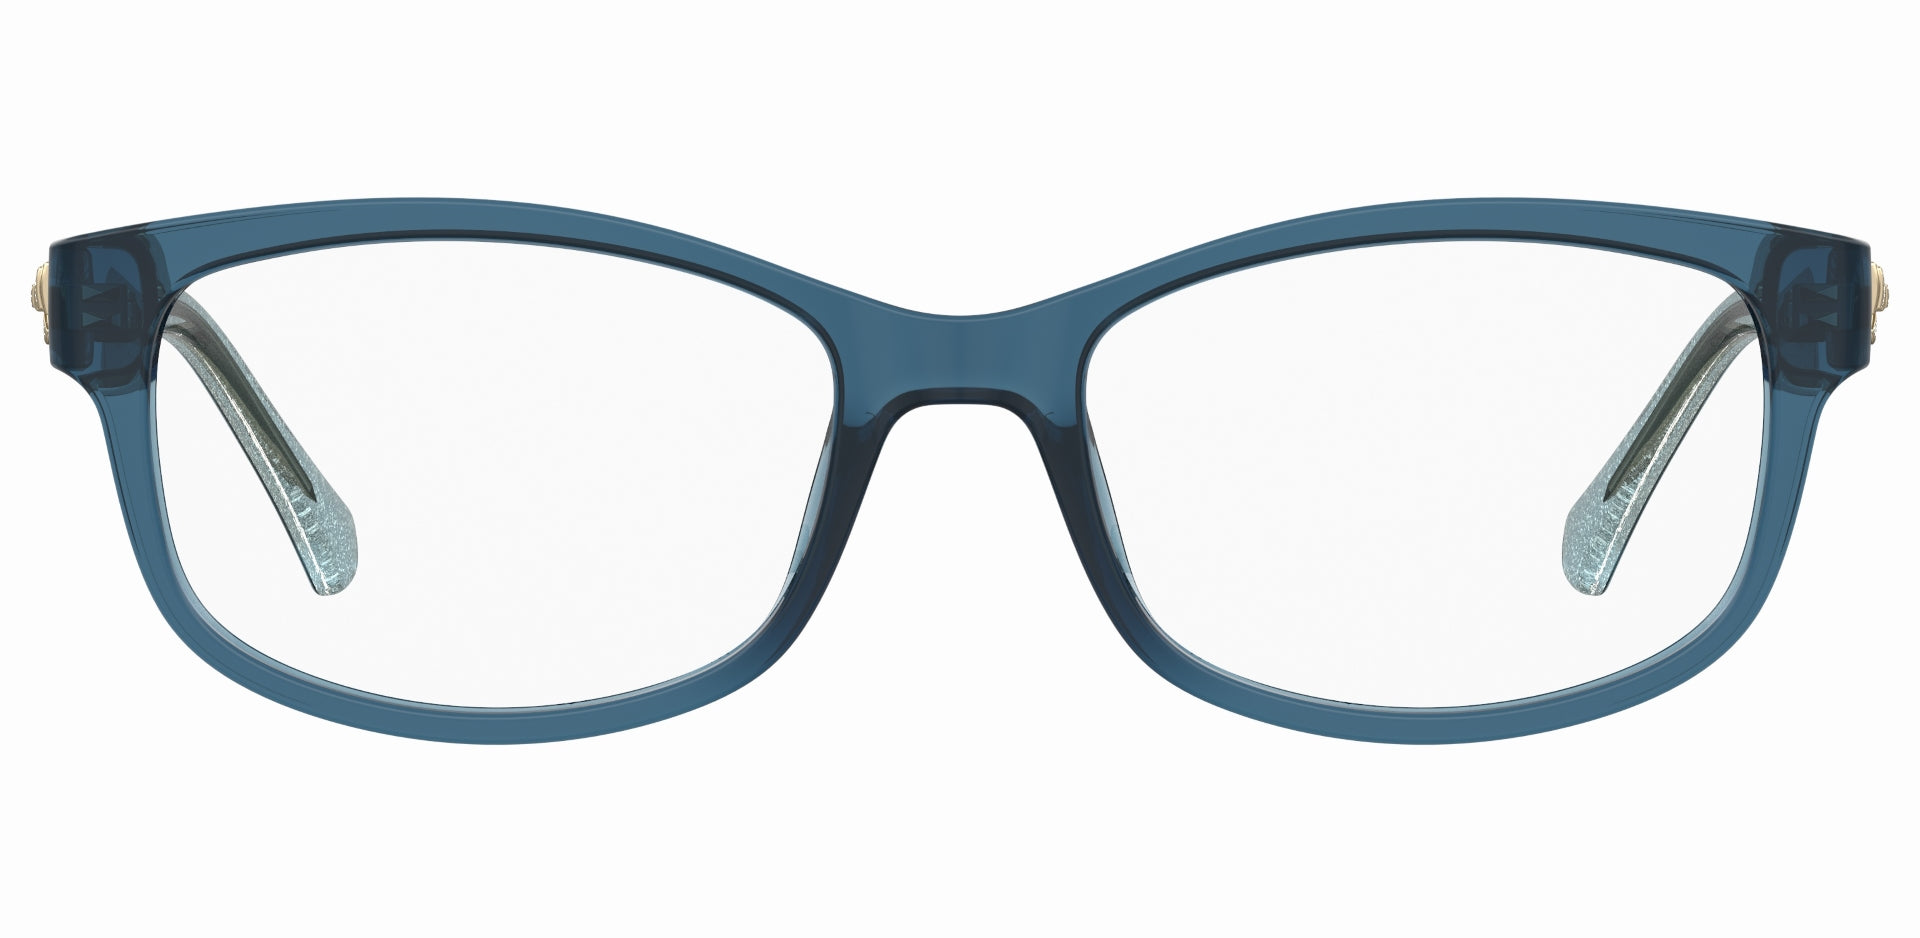 SEVENTH STREET by SAFILO WOMAN RECTANGULAR Eyeglasses-7A 576/G Size 52